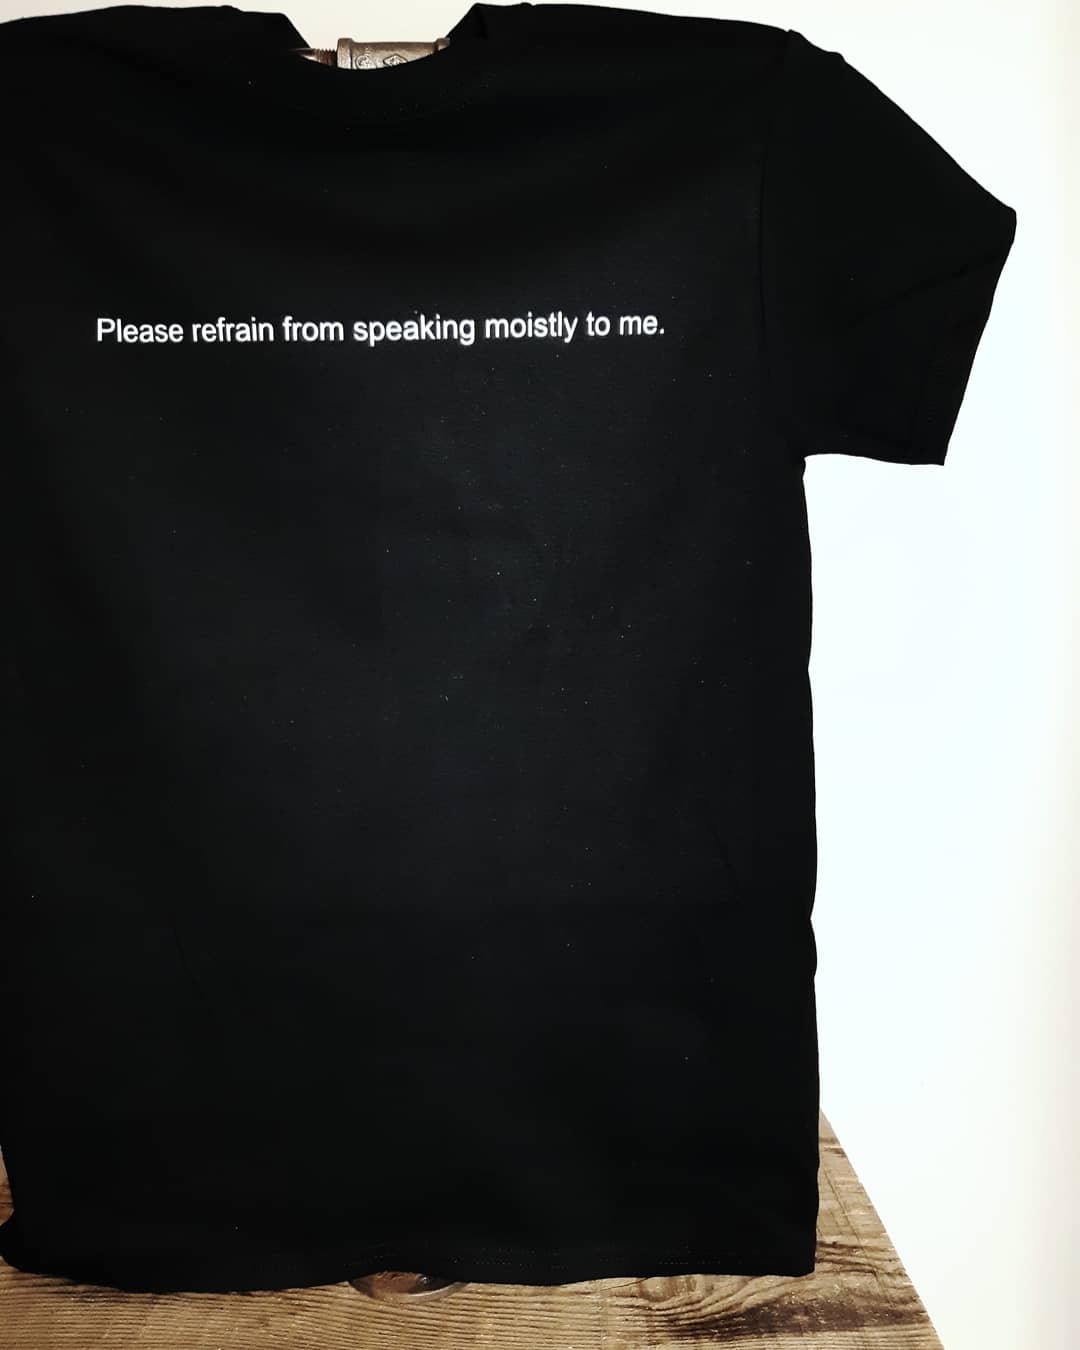 Please Refrain From Speaking Moistly Tshirt